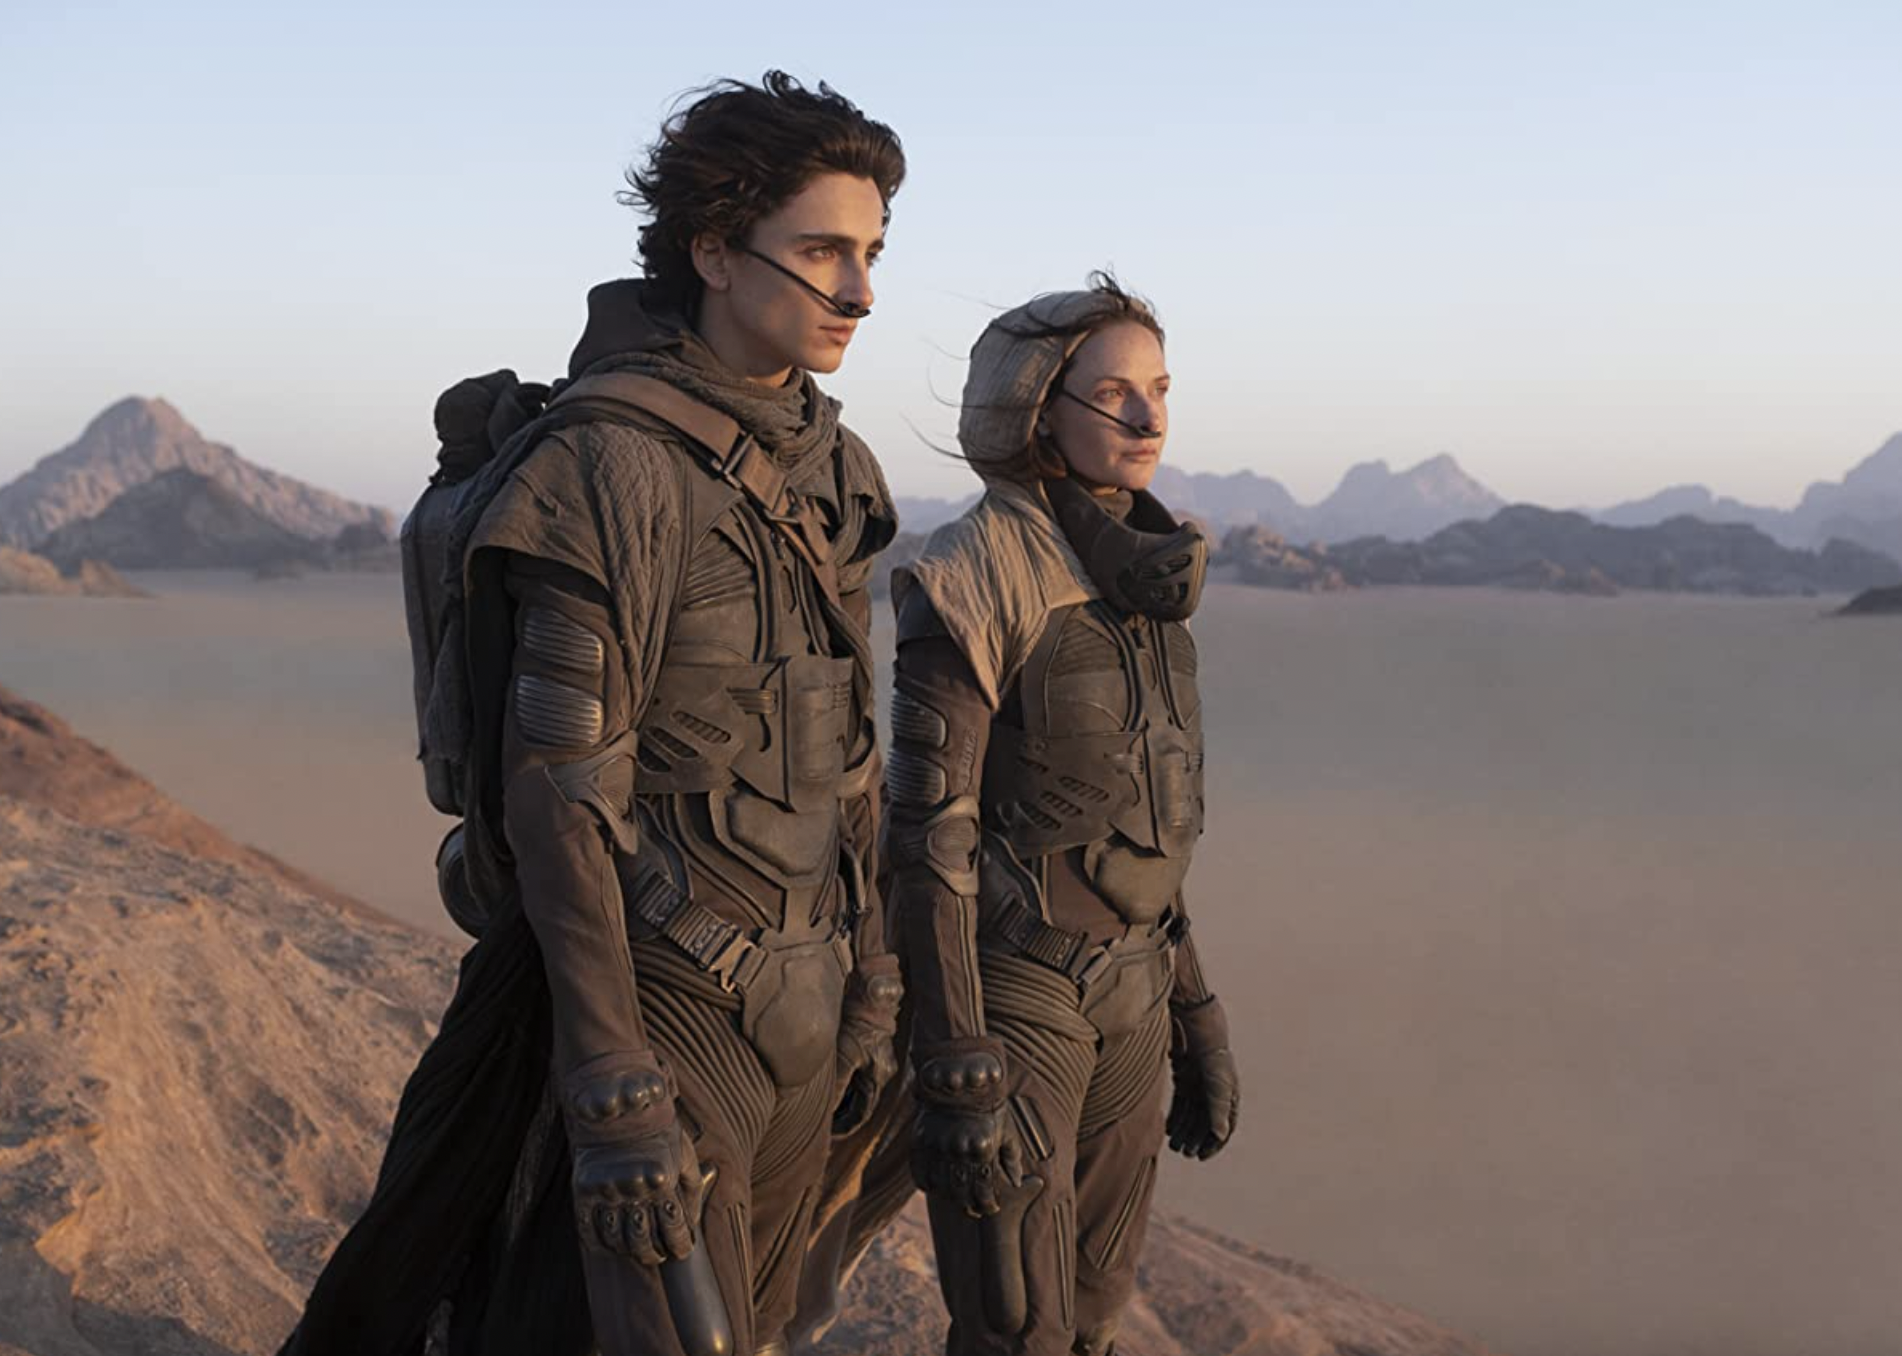 Rebecca Ferguson and Timothée Chalamet in "Dune".